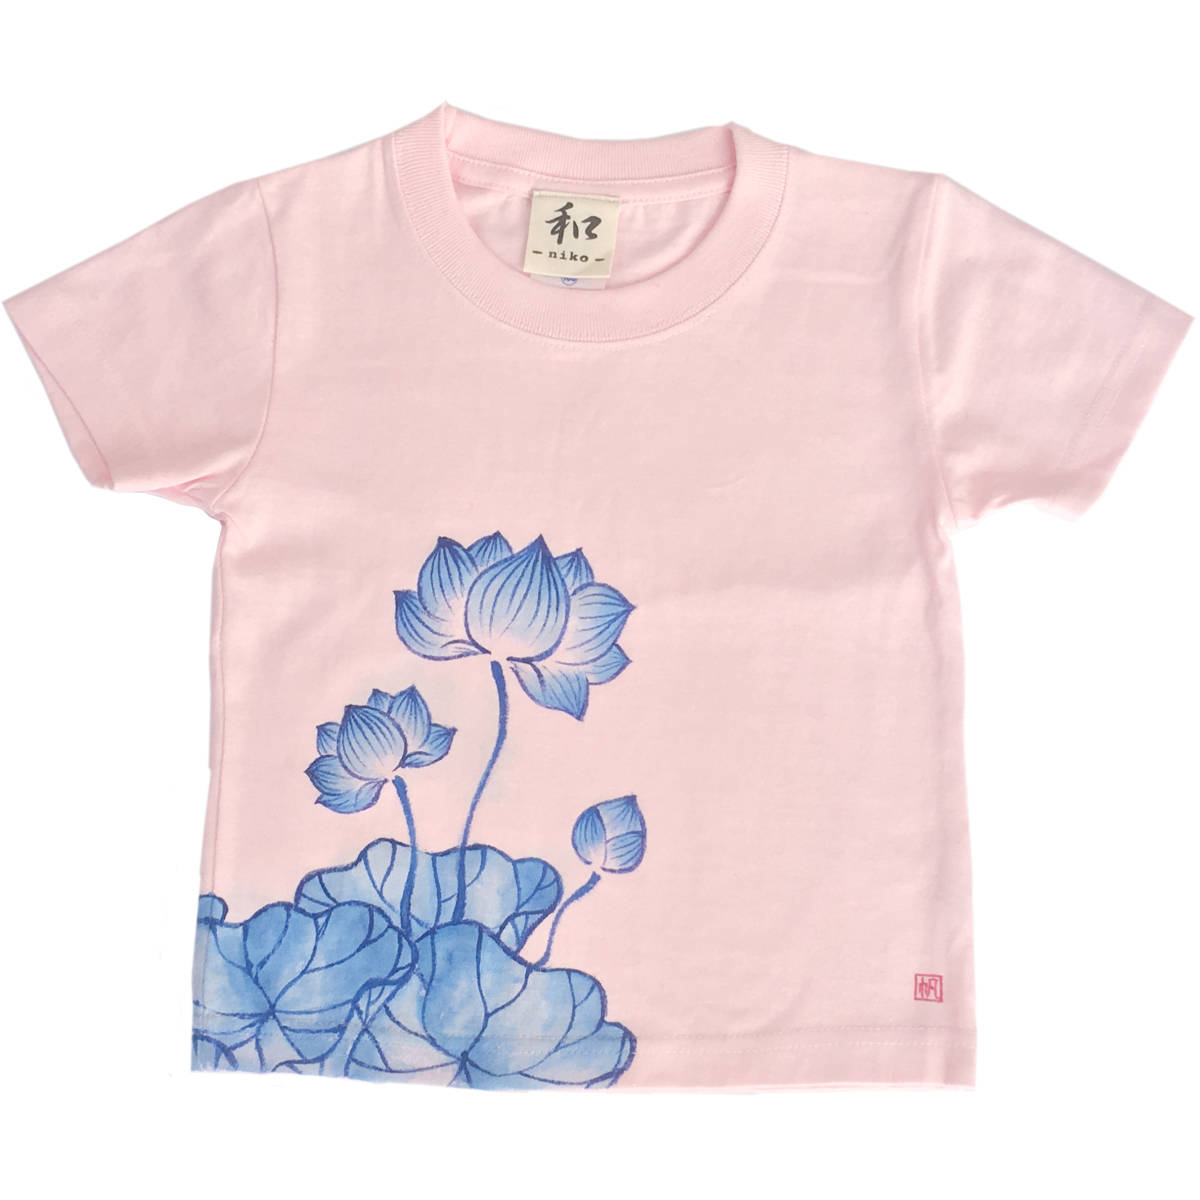 Kids T-shirt, size 130, pink lotus pattern T-shirt, hand-painted lotus flower pattern T-shirt, short sleeve, Japanese pattern, Japanese style, retro, handmade, tops, short sleeve t-shirt, 130(125~134cm)